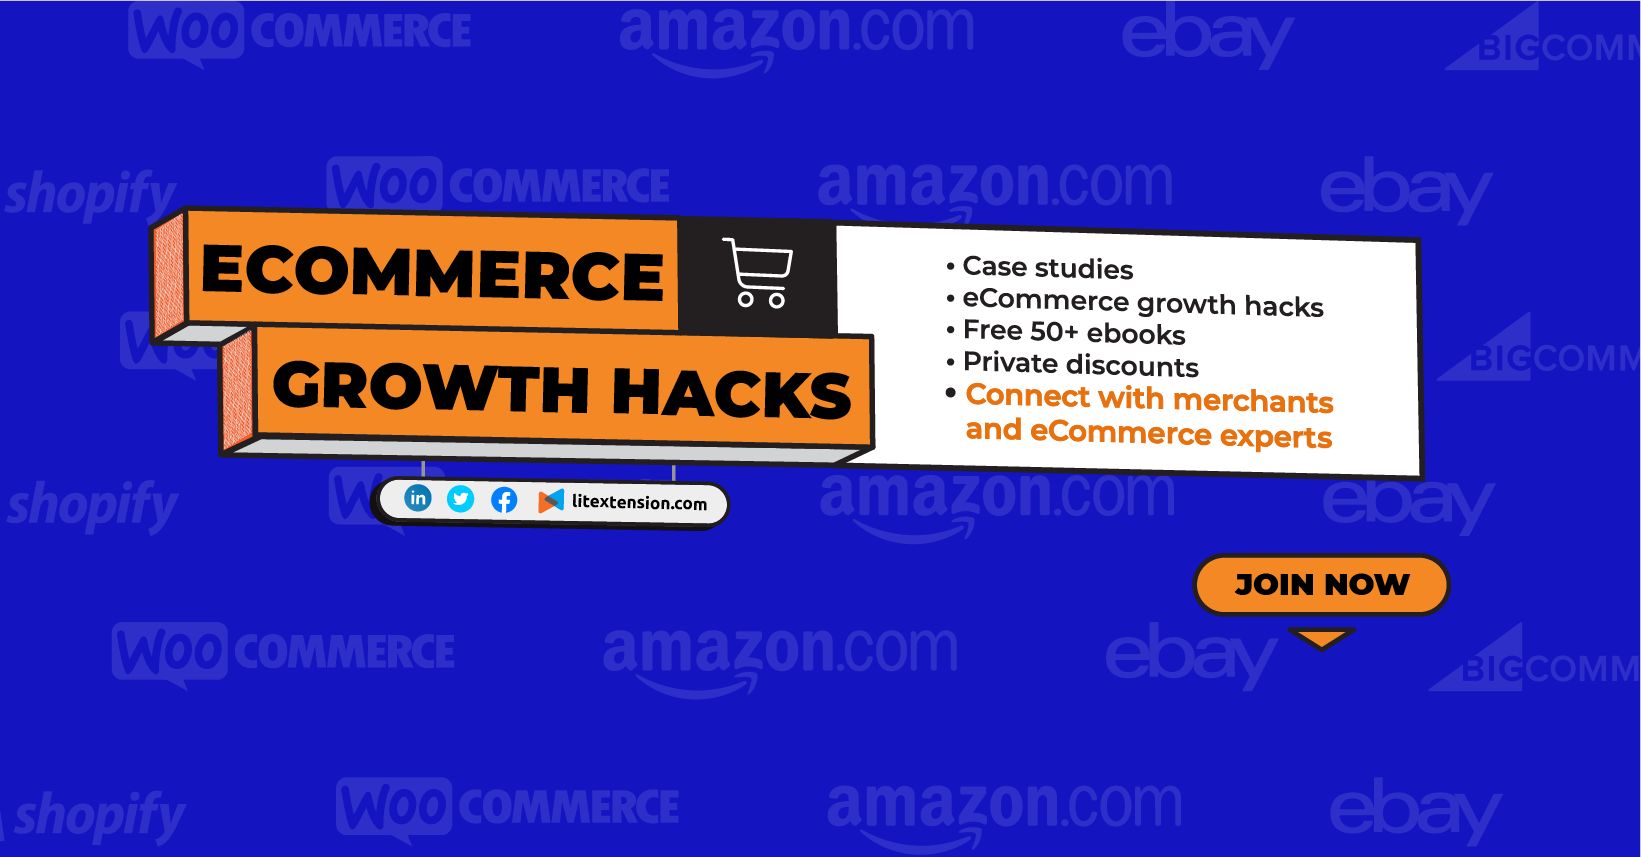 eCommerce Growth Hacks